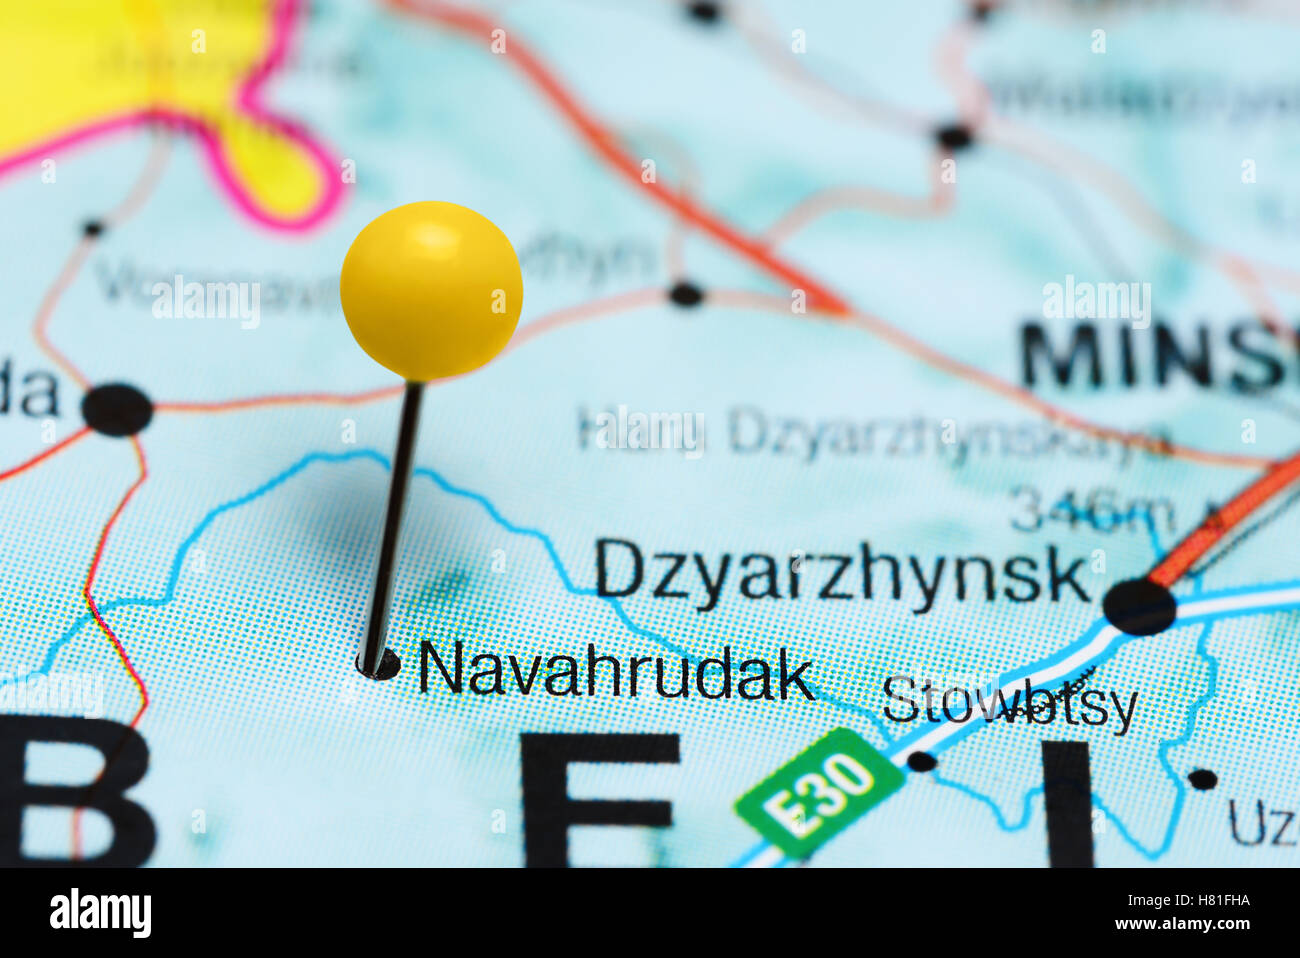 Navahrudak pinned on a map of Belarus Stock Photo